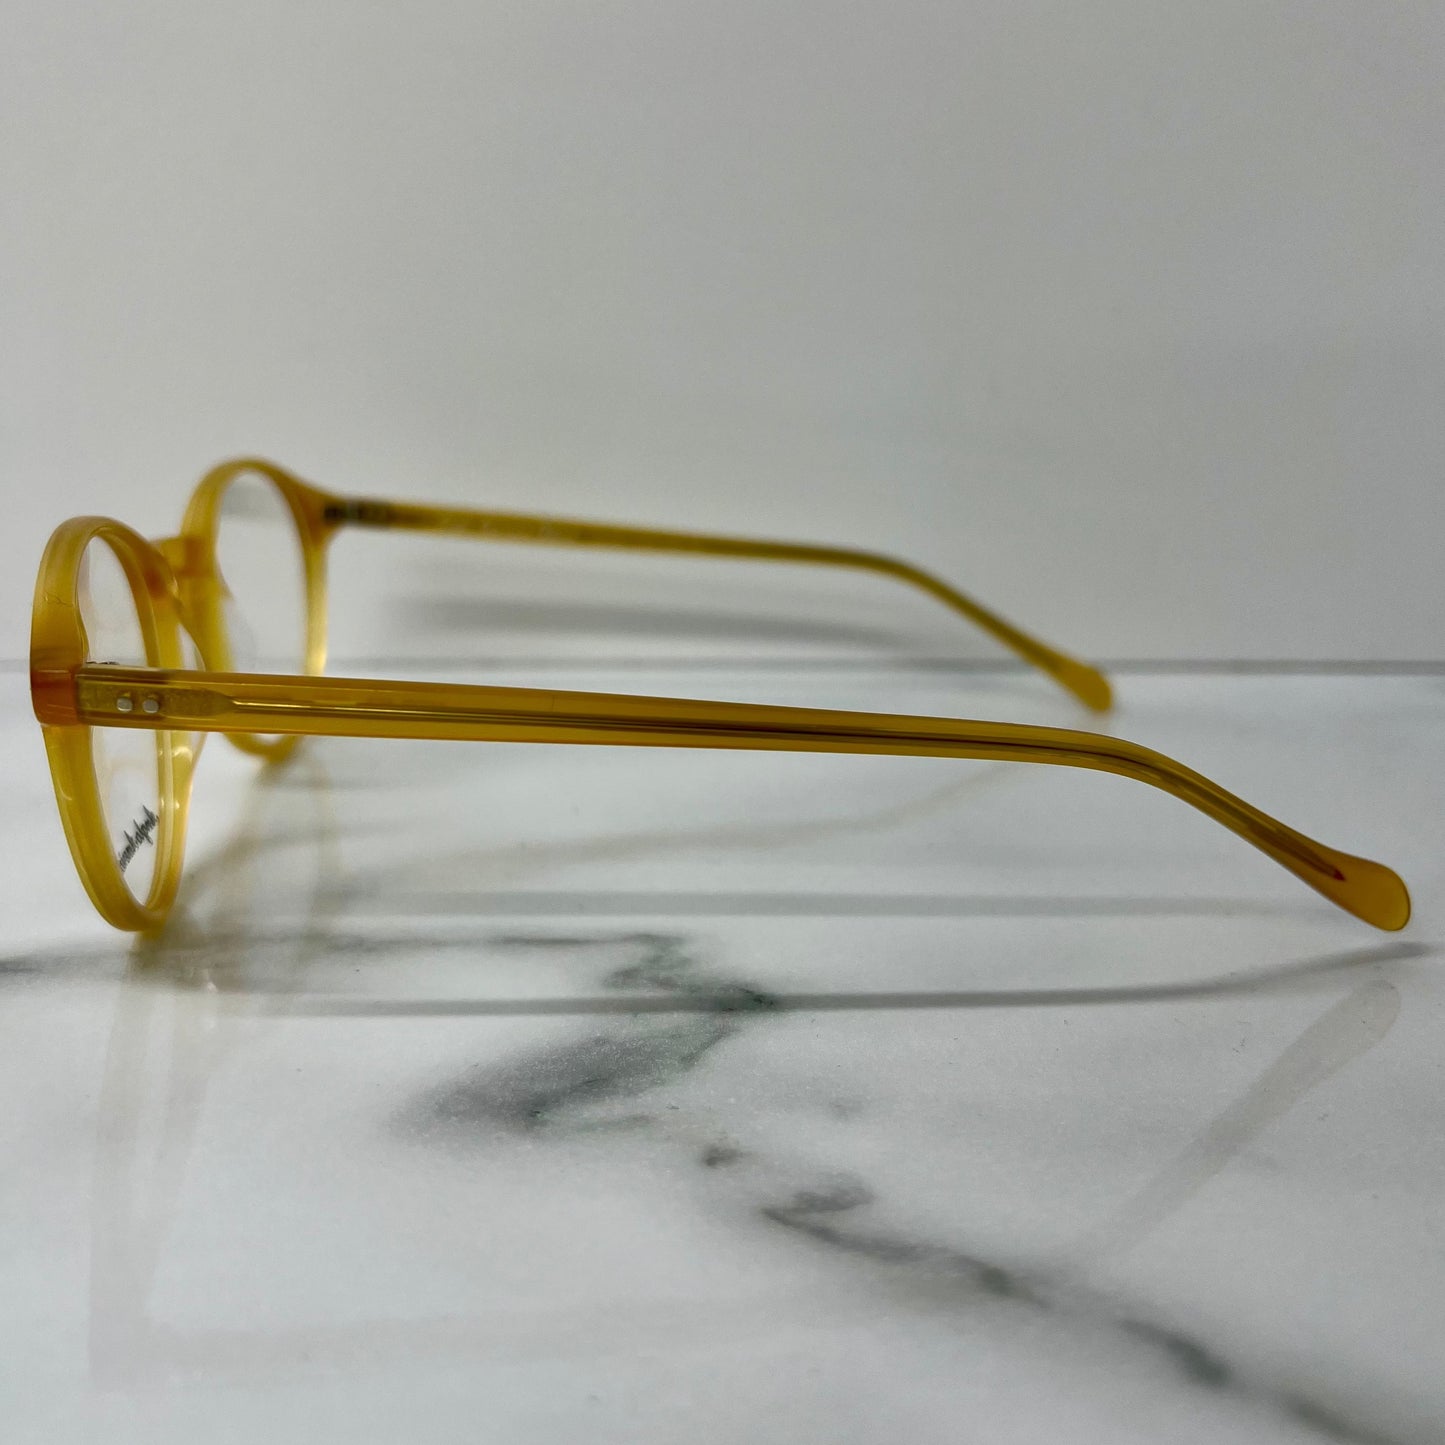 Anglo American 406 Optical Glasses Yellow England Designer Eyeglasses Classic